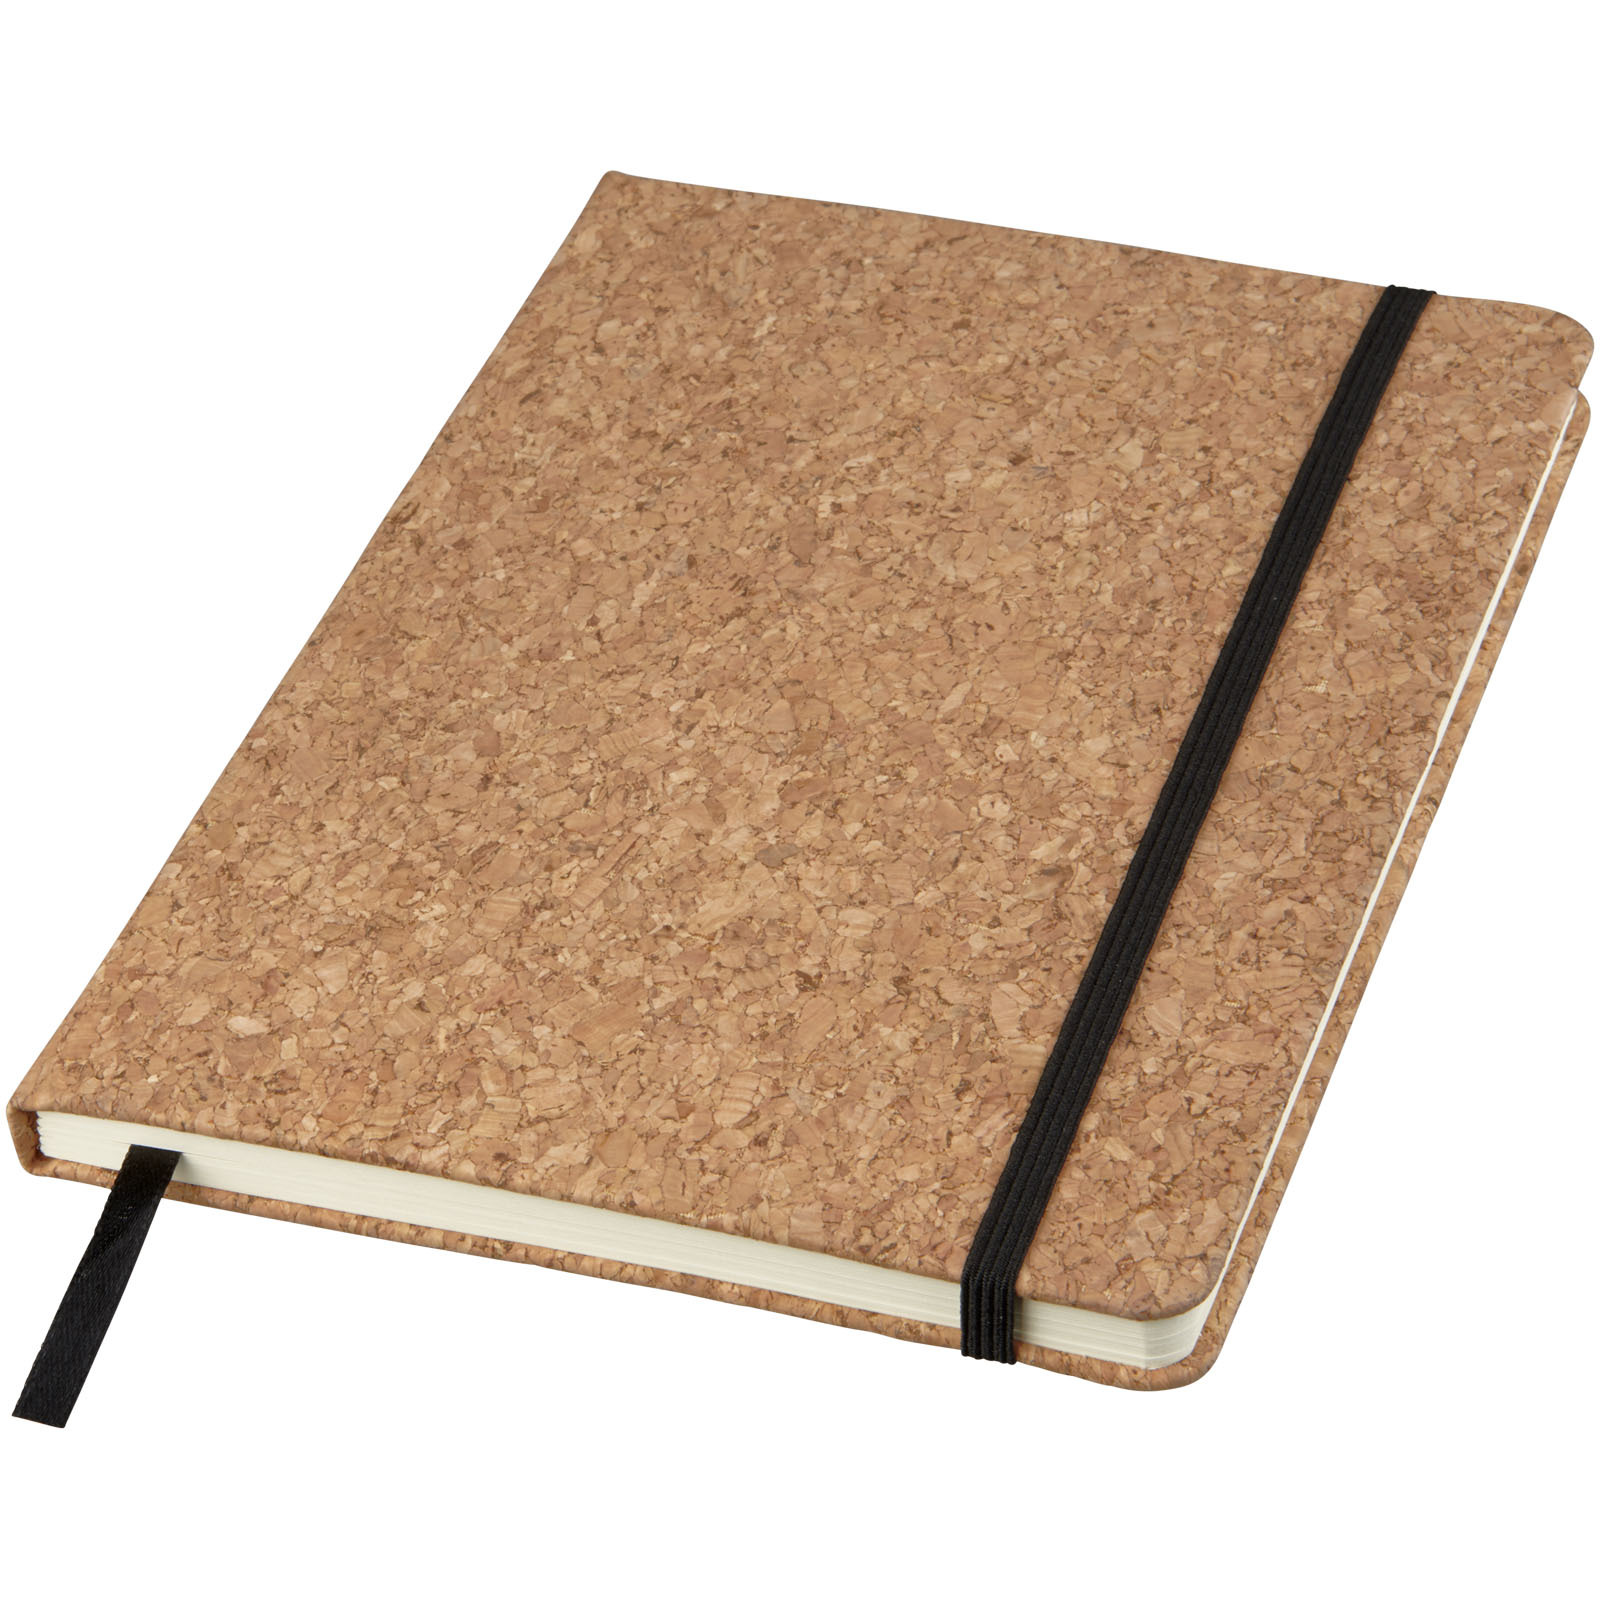 Quaderno con copertina in sughero A5 con elastico e nastro neri - Salvirola